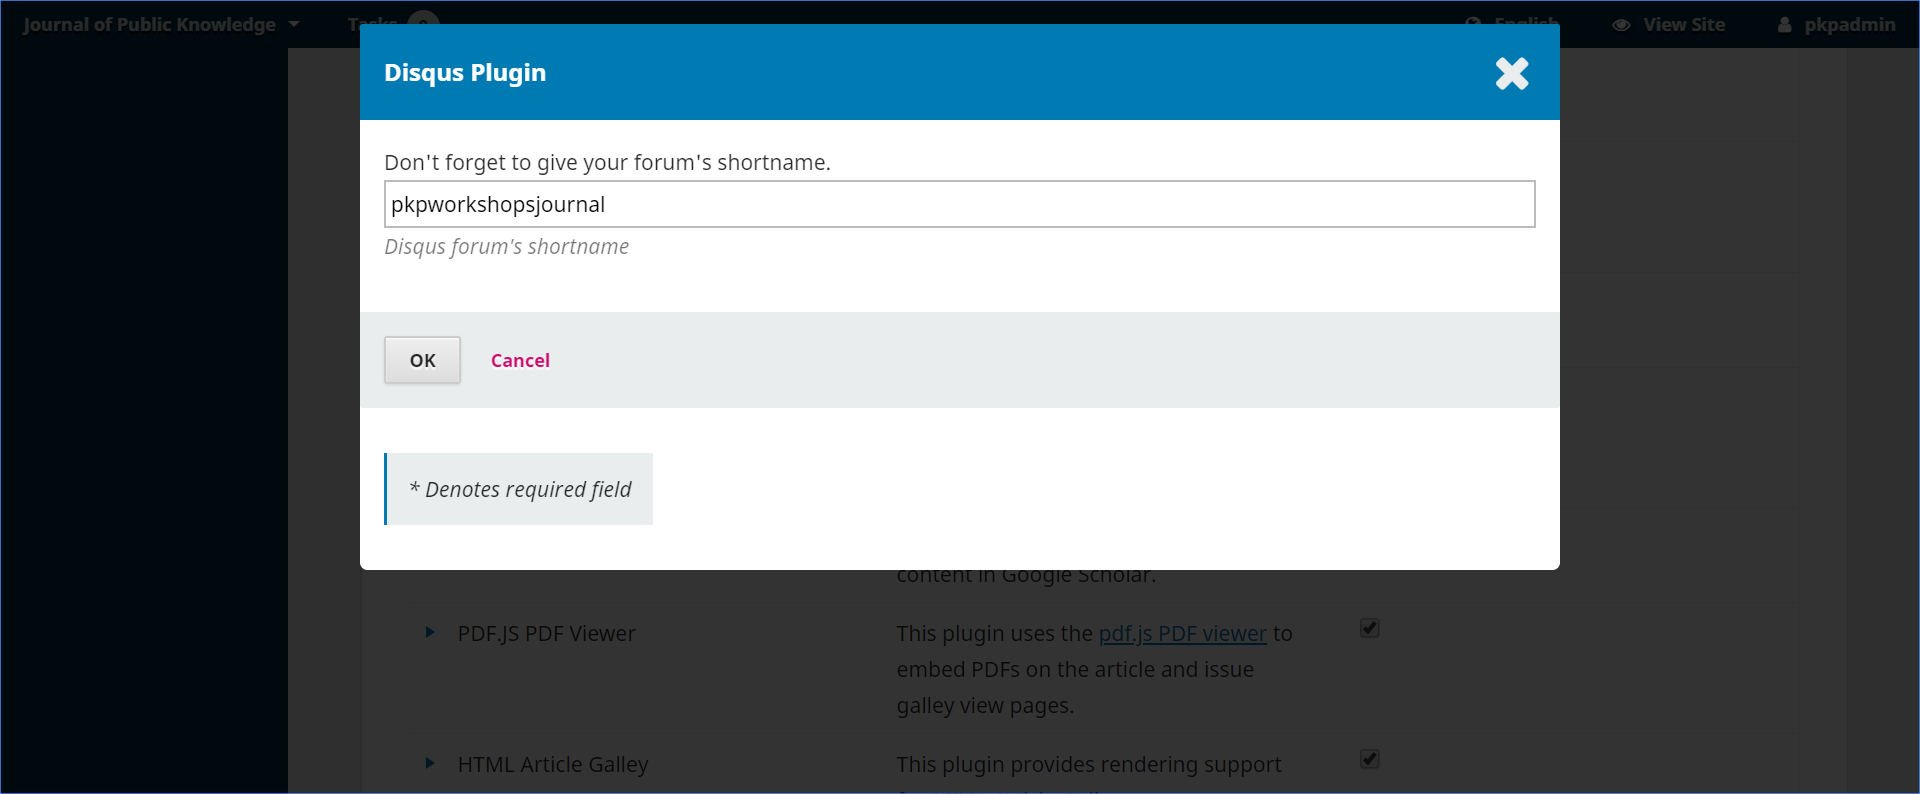 OJS Disqus plugin settings menu with an option to enter a forum's shortname.